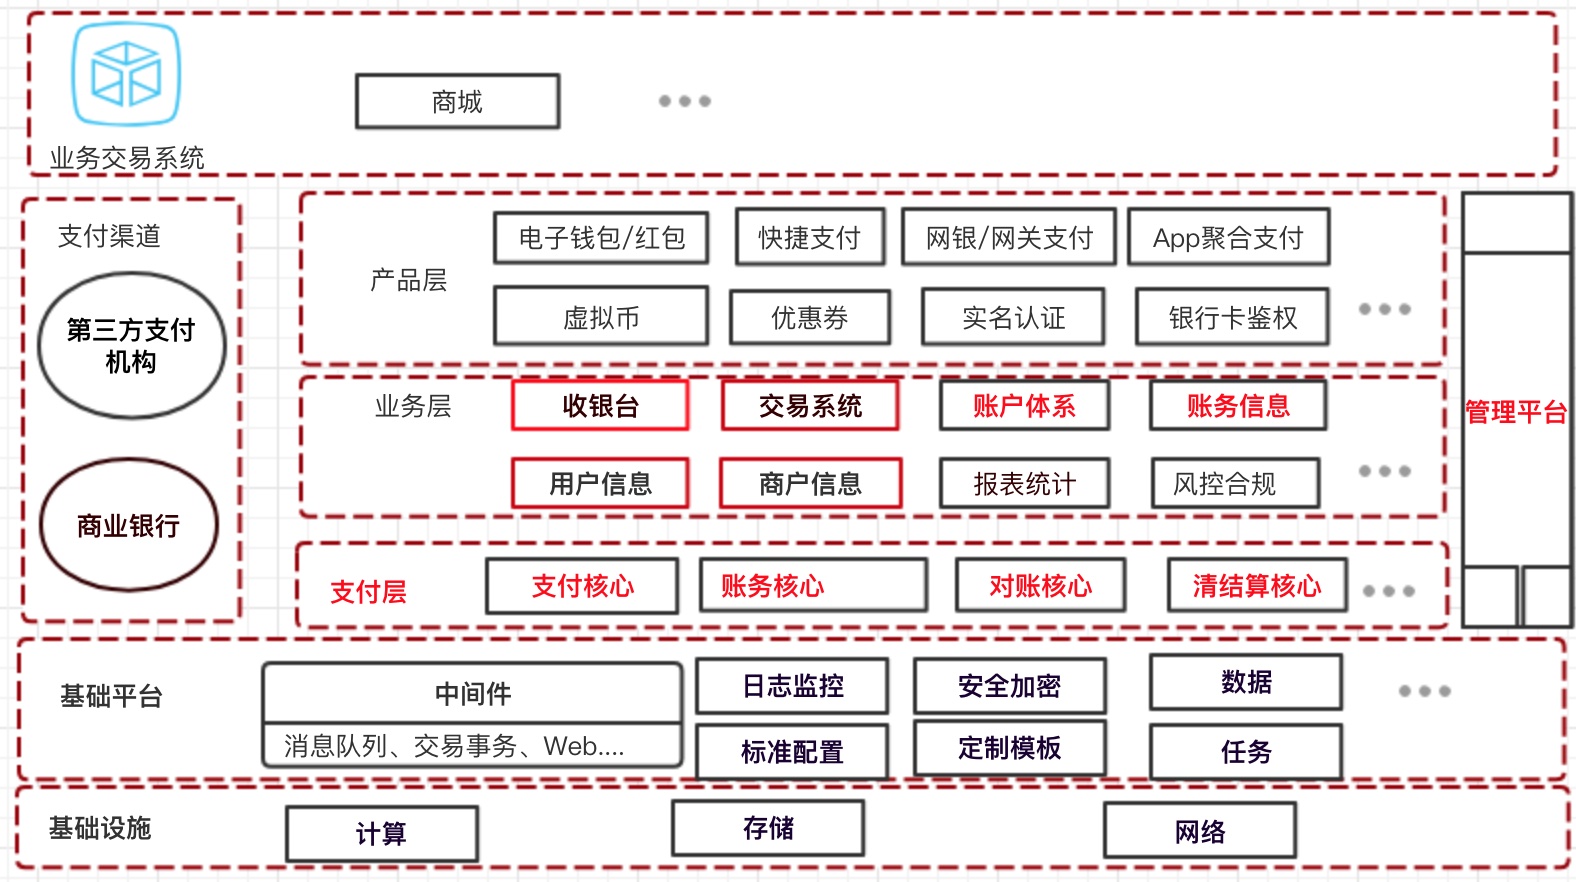 images/聚合支付平台系统架构.fanshuang.19.jpg